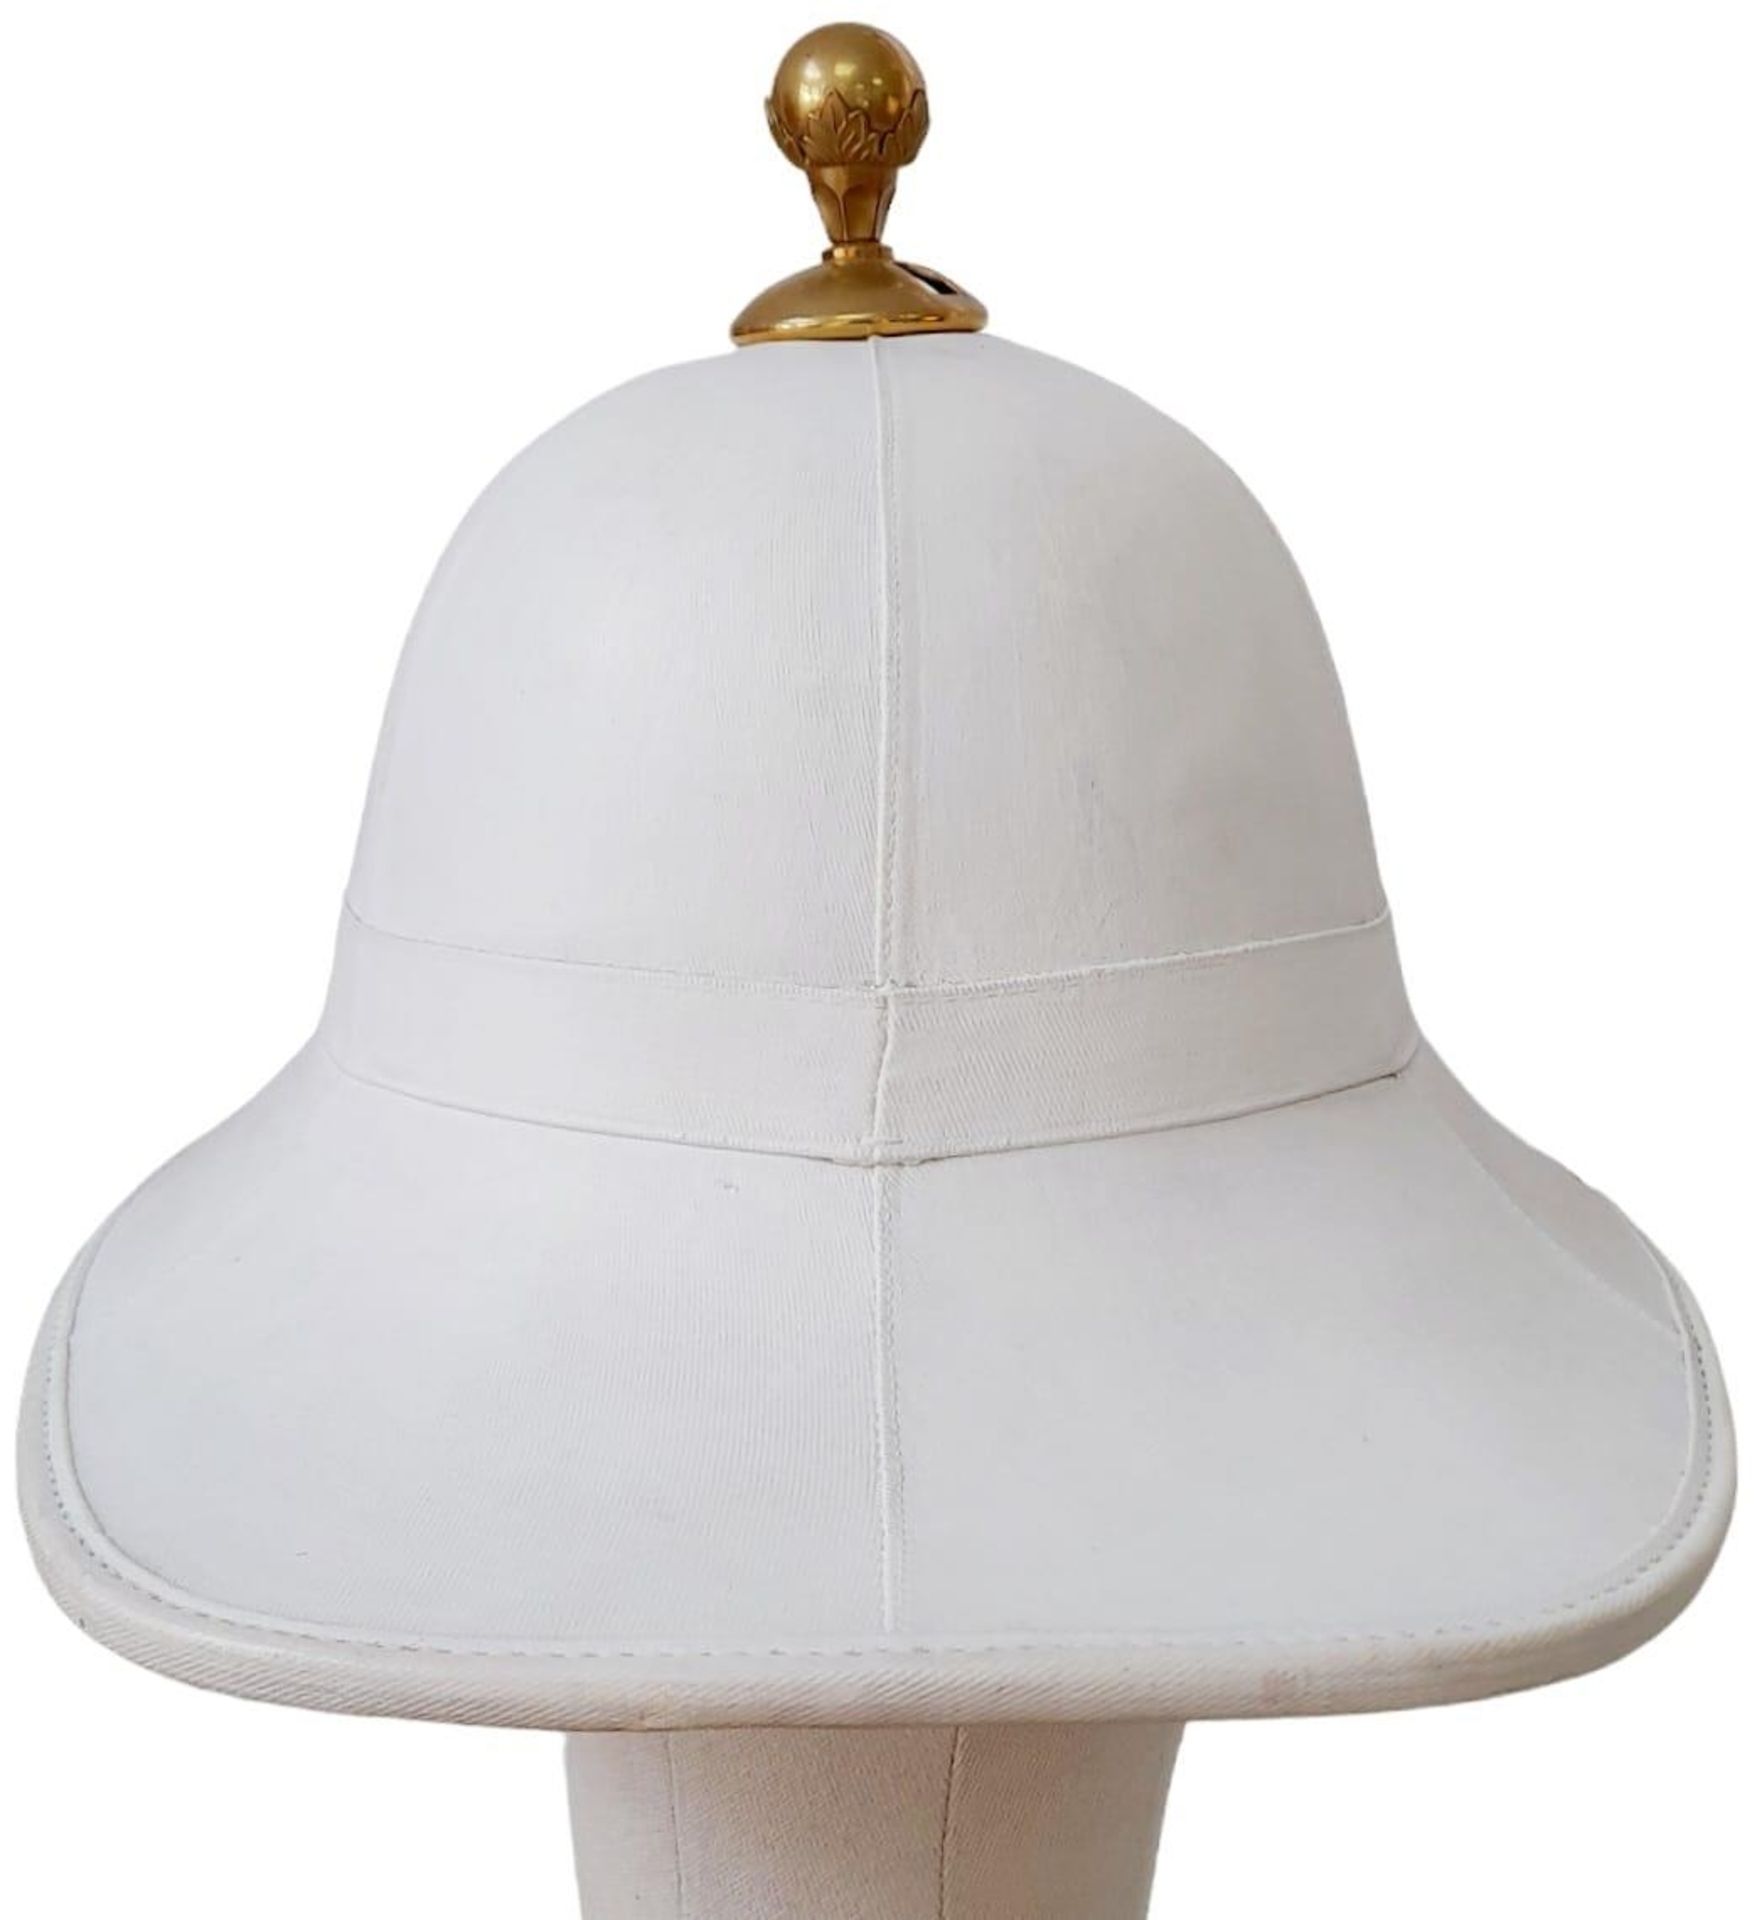 WW2 British Royal Marines Pith Helmet, Kings Crown small badge type. - Image 3 of 5